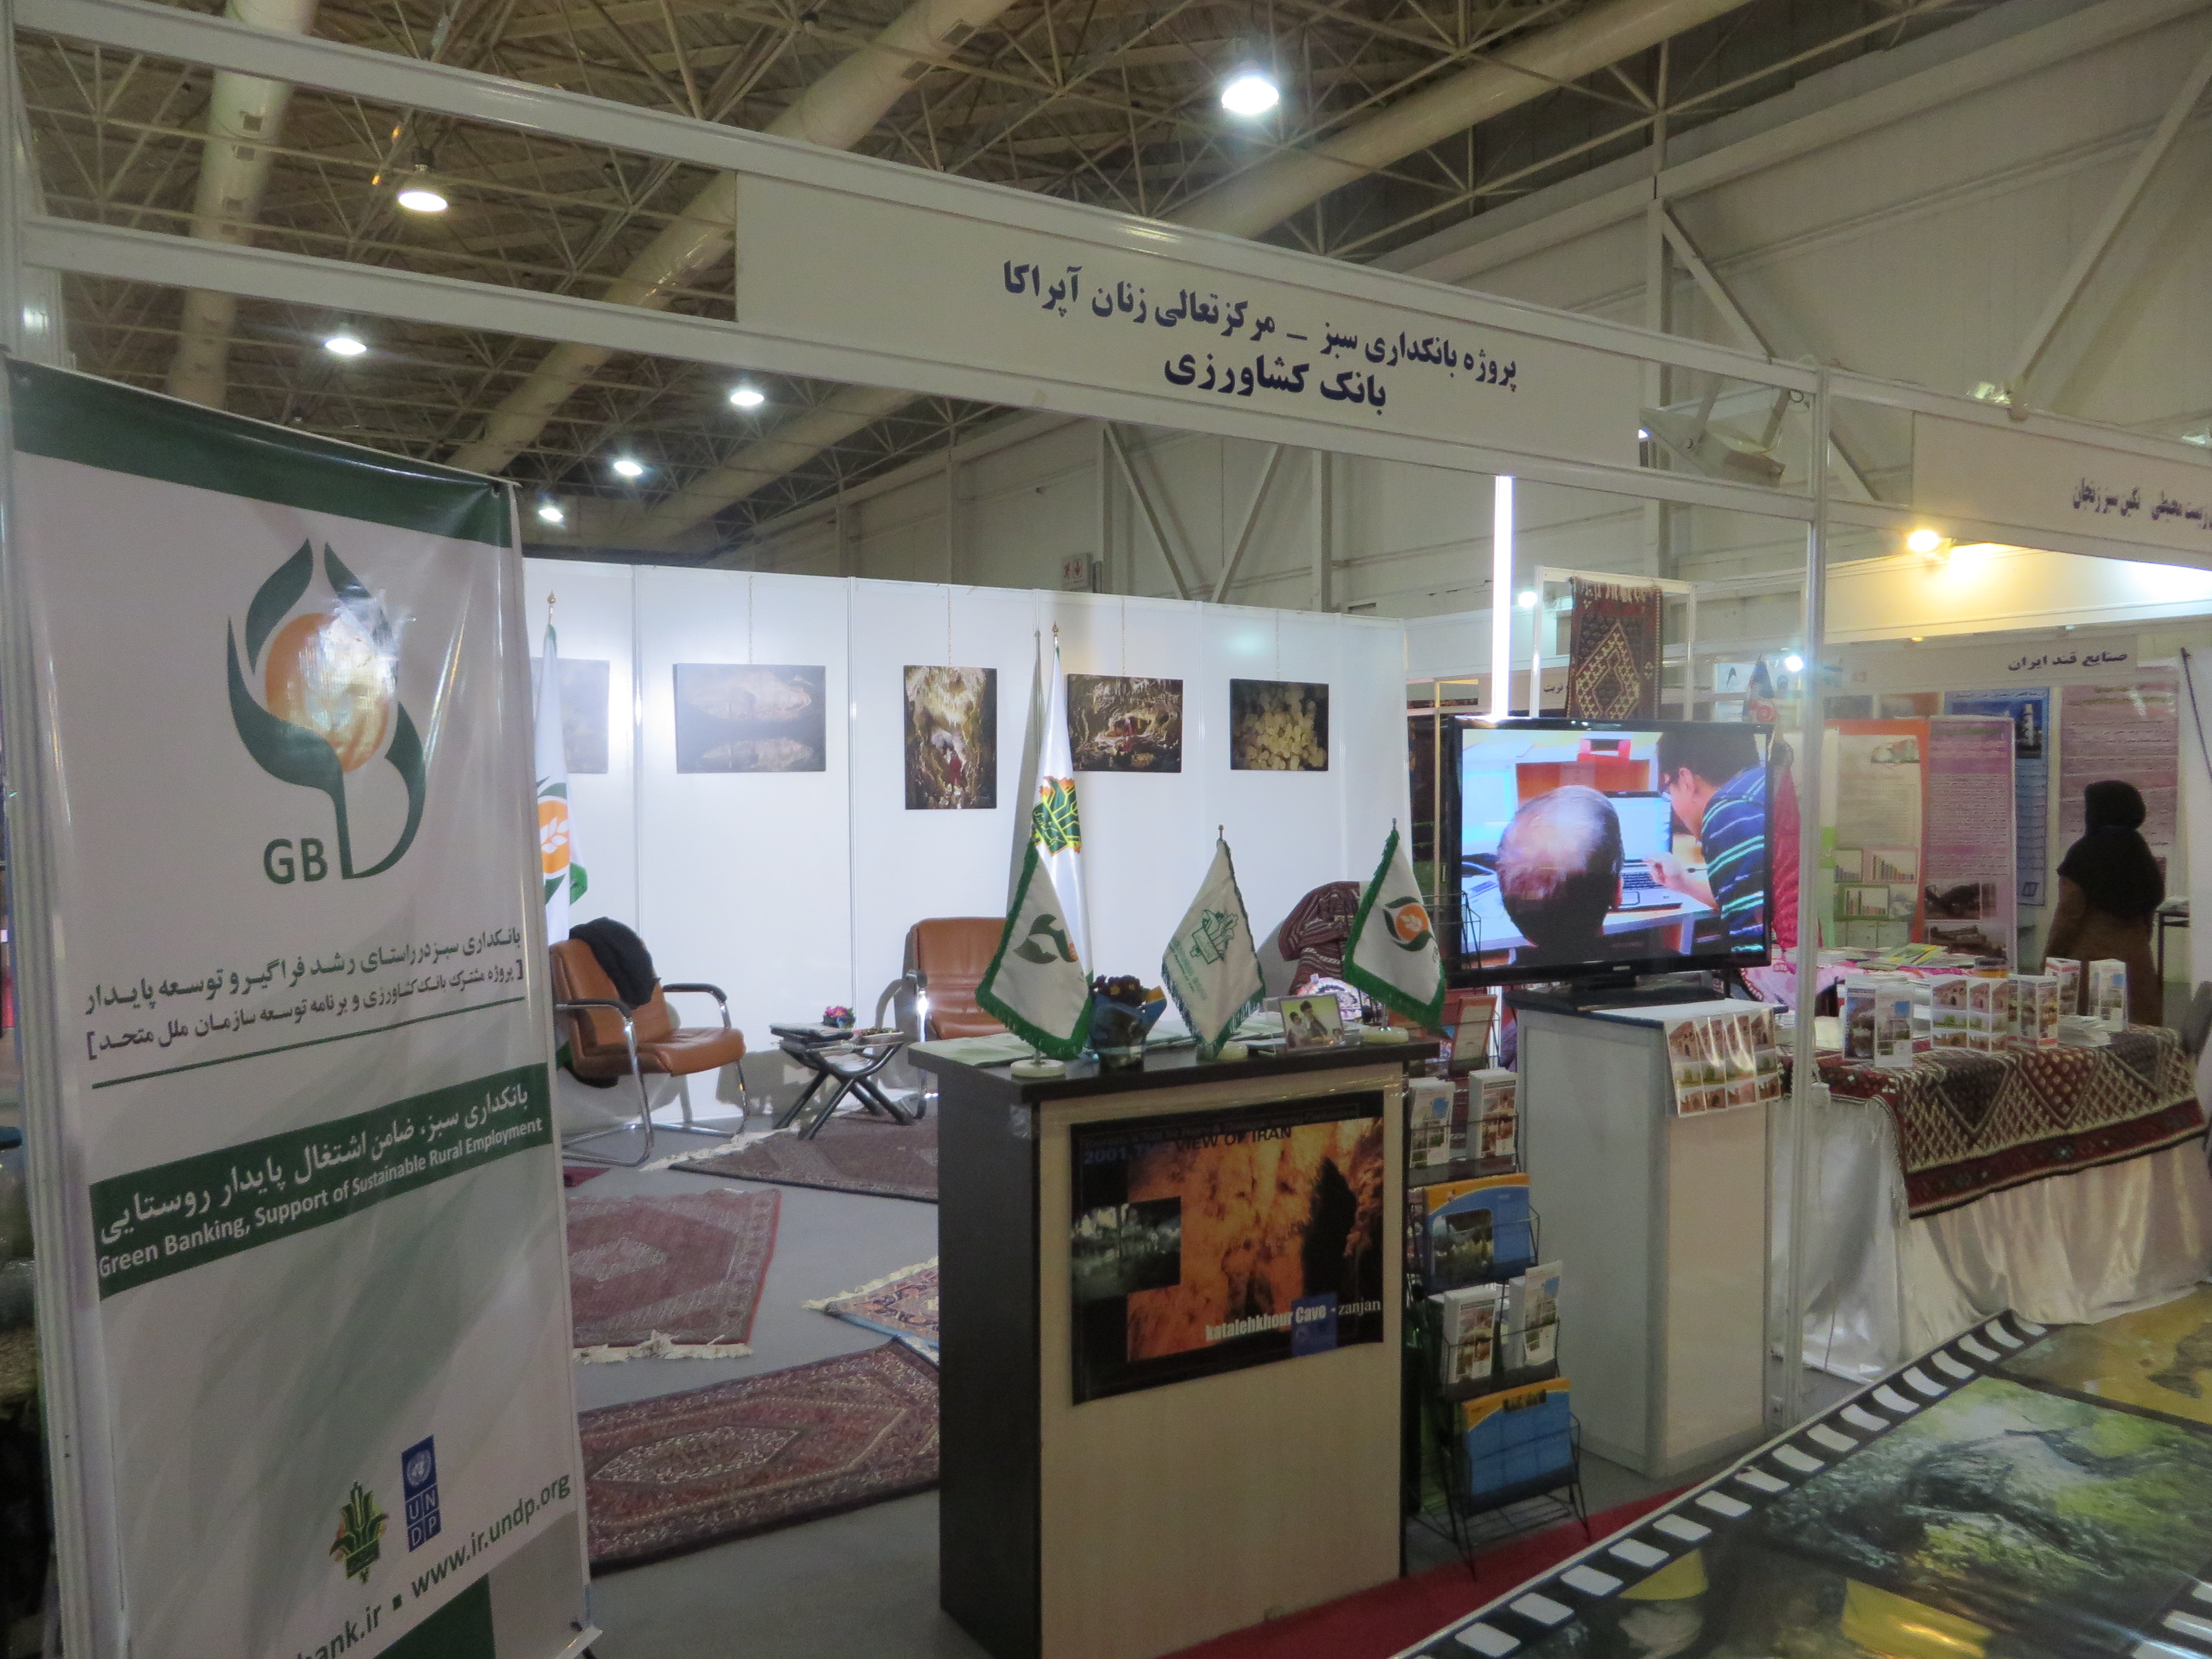 14th International Environment Exhibition